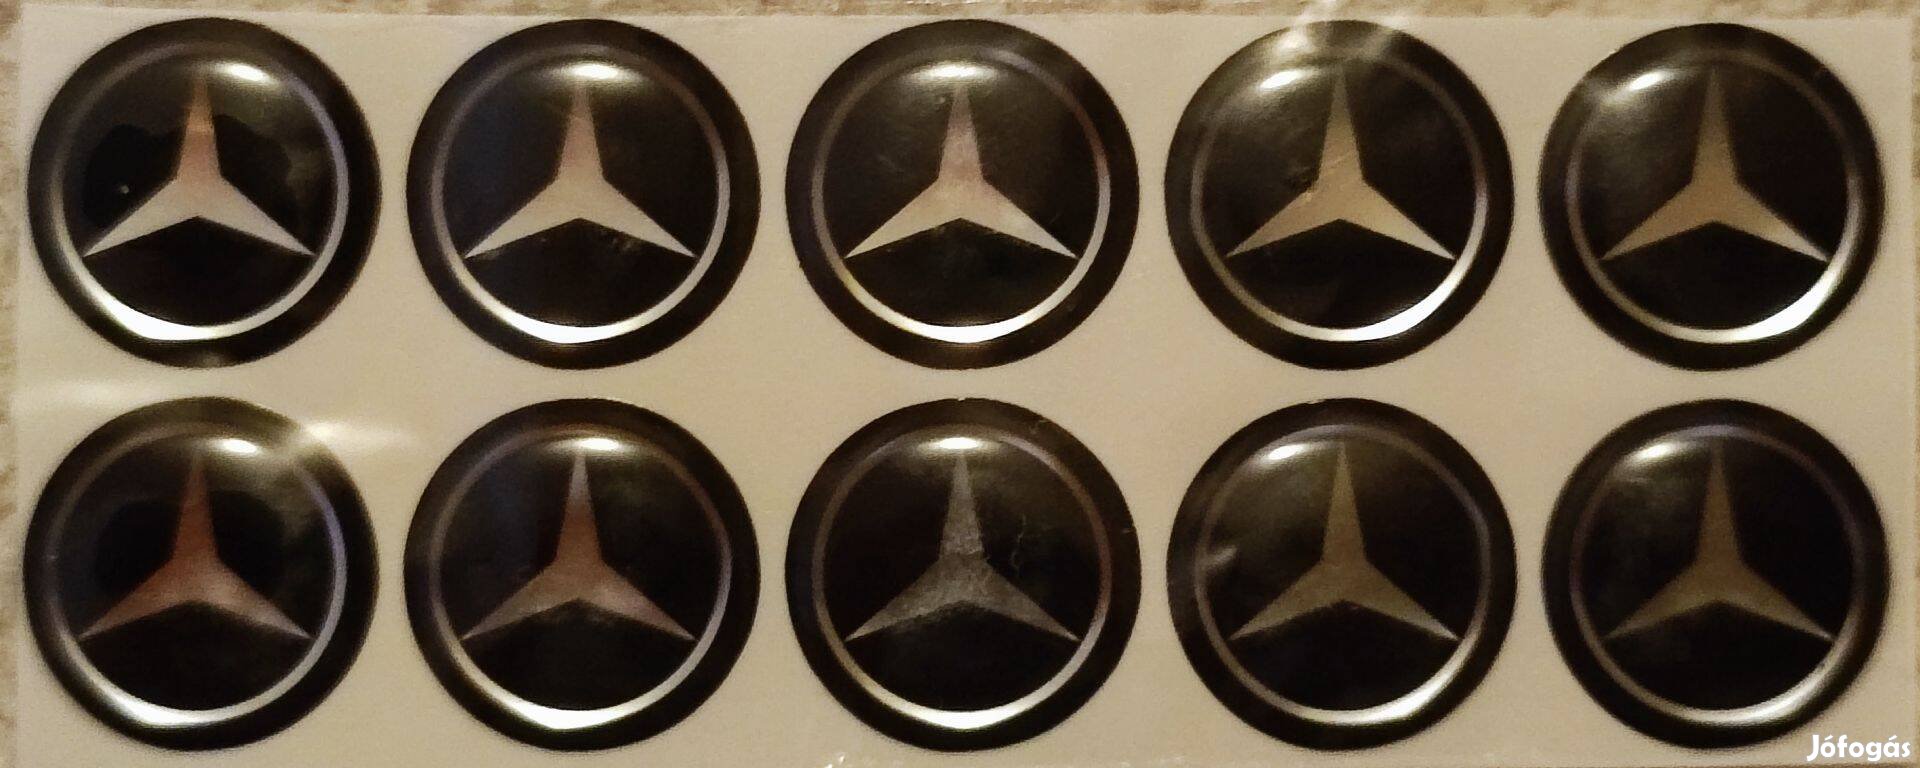 Mercedes - Benz indítókulcs (autó kulcs) embléma 14 mm-es